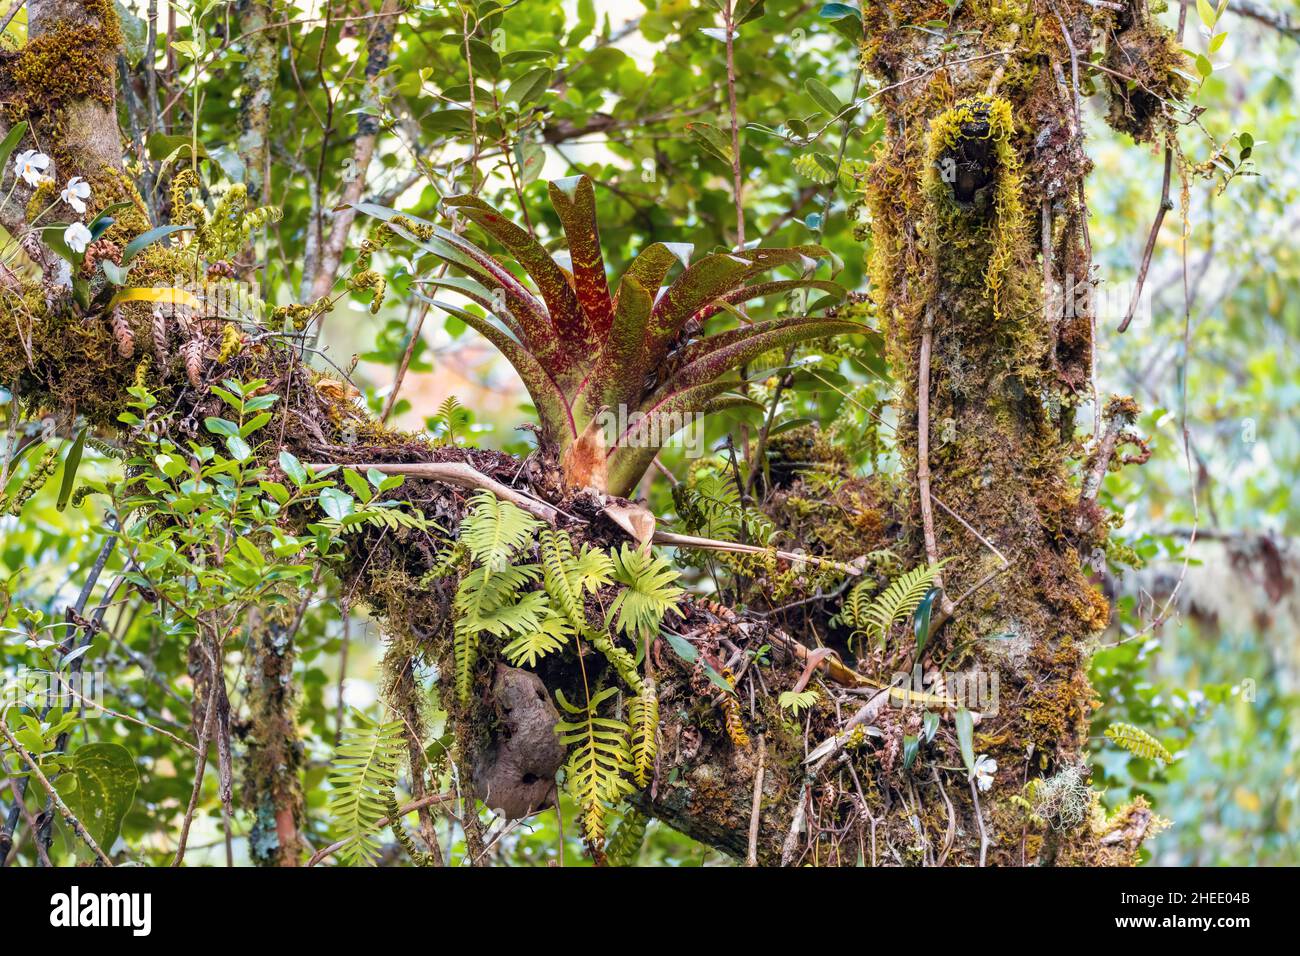 beautiful flower Bromeliad on a tree branch. San Gerardo de Dota, Costa Rica Stock Photo